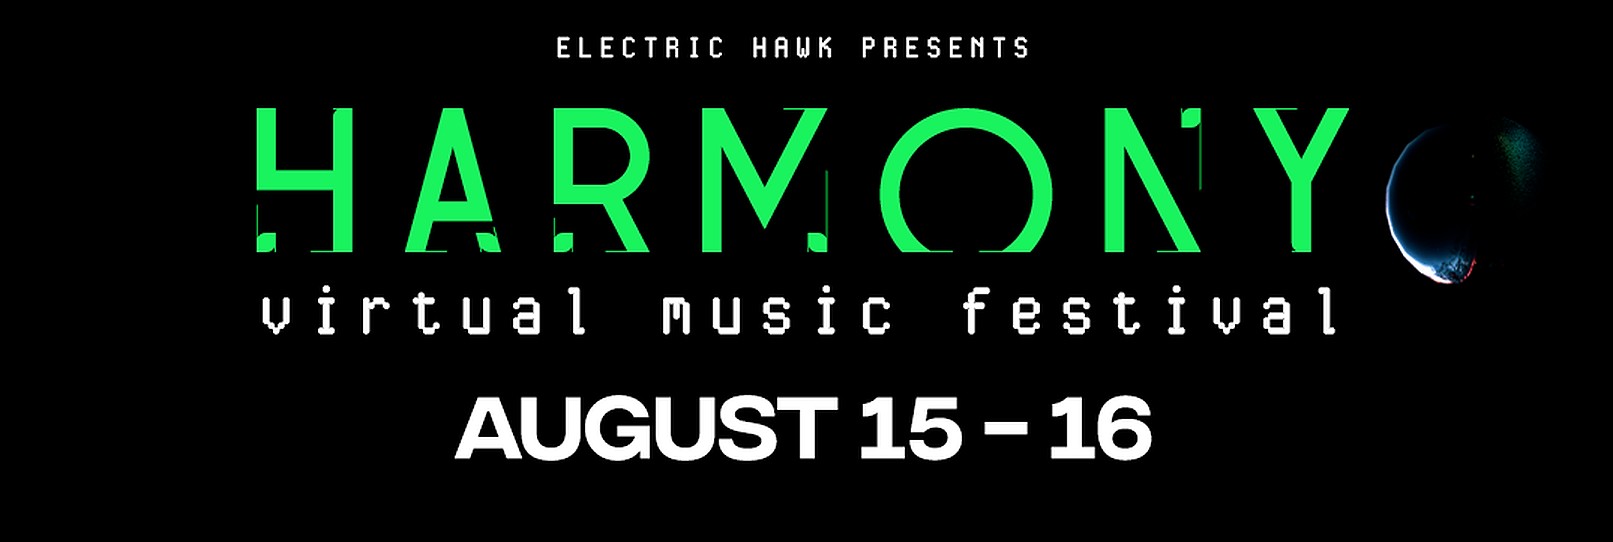 Electric Hawk Harmony Virtual Music Festival August